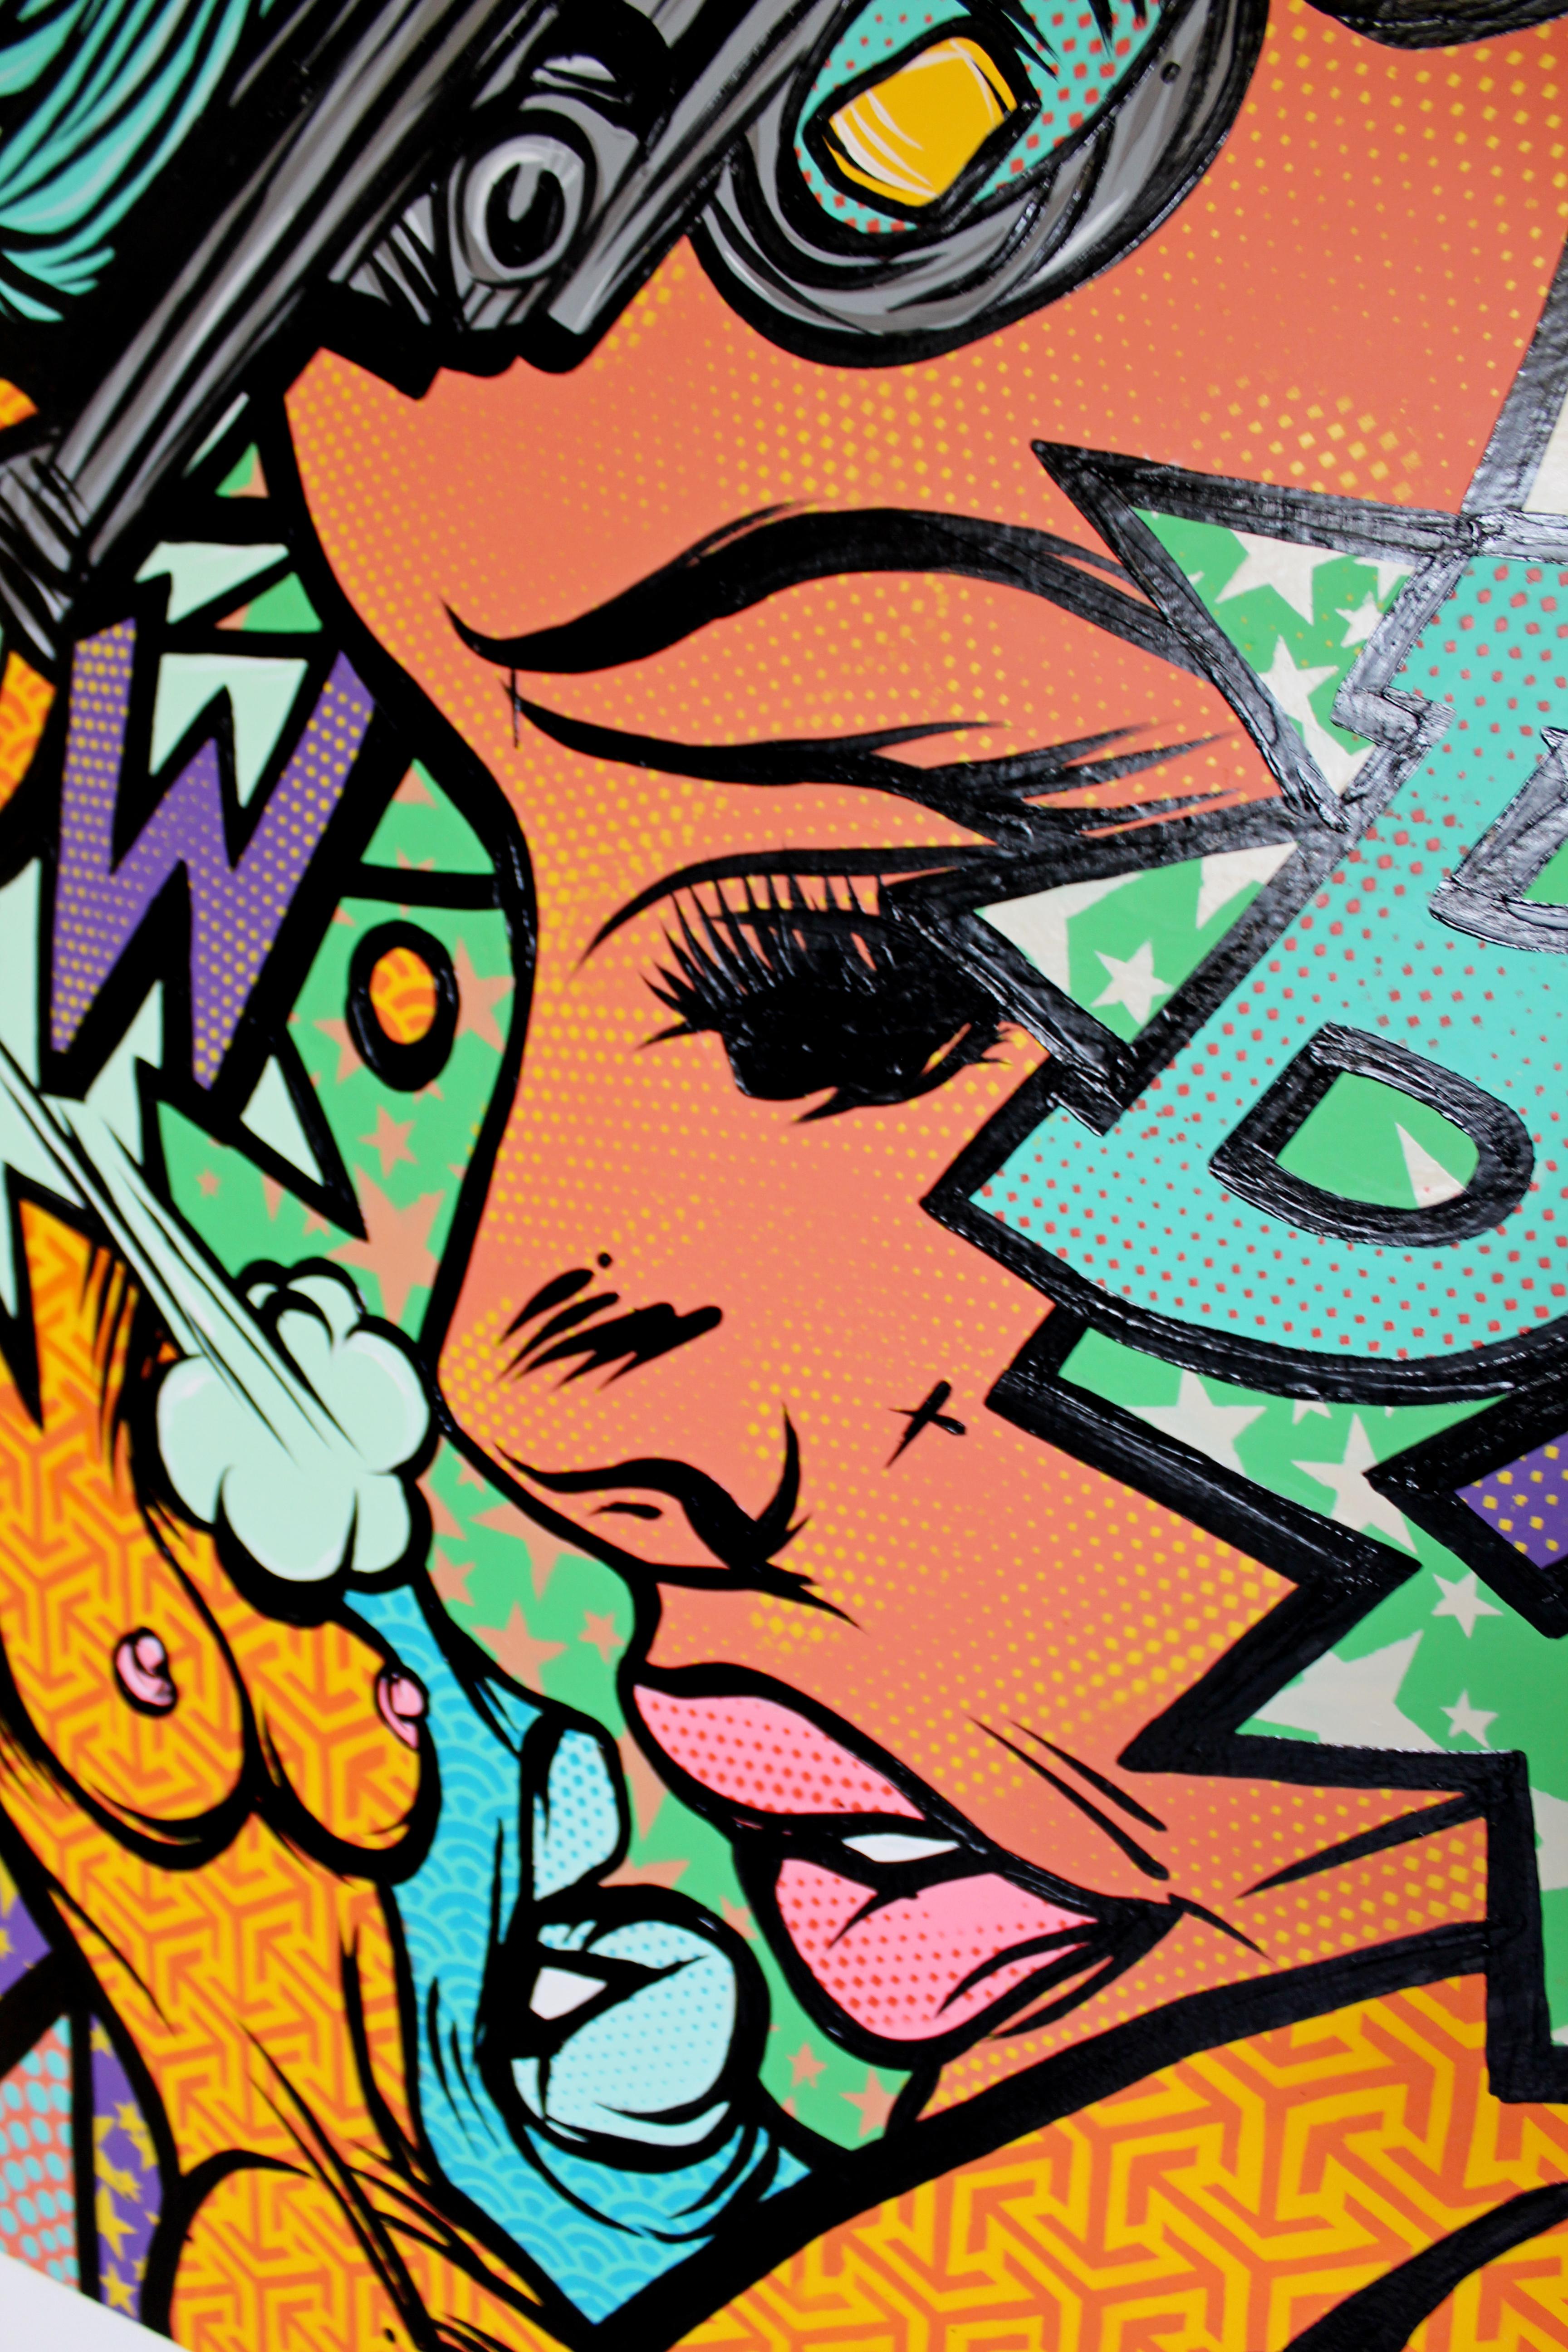 Contemporary Modernist Pop Graphic Art Signed Chris Hobe Artrevolt, Dated 2015 1